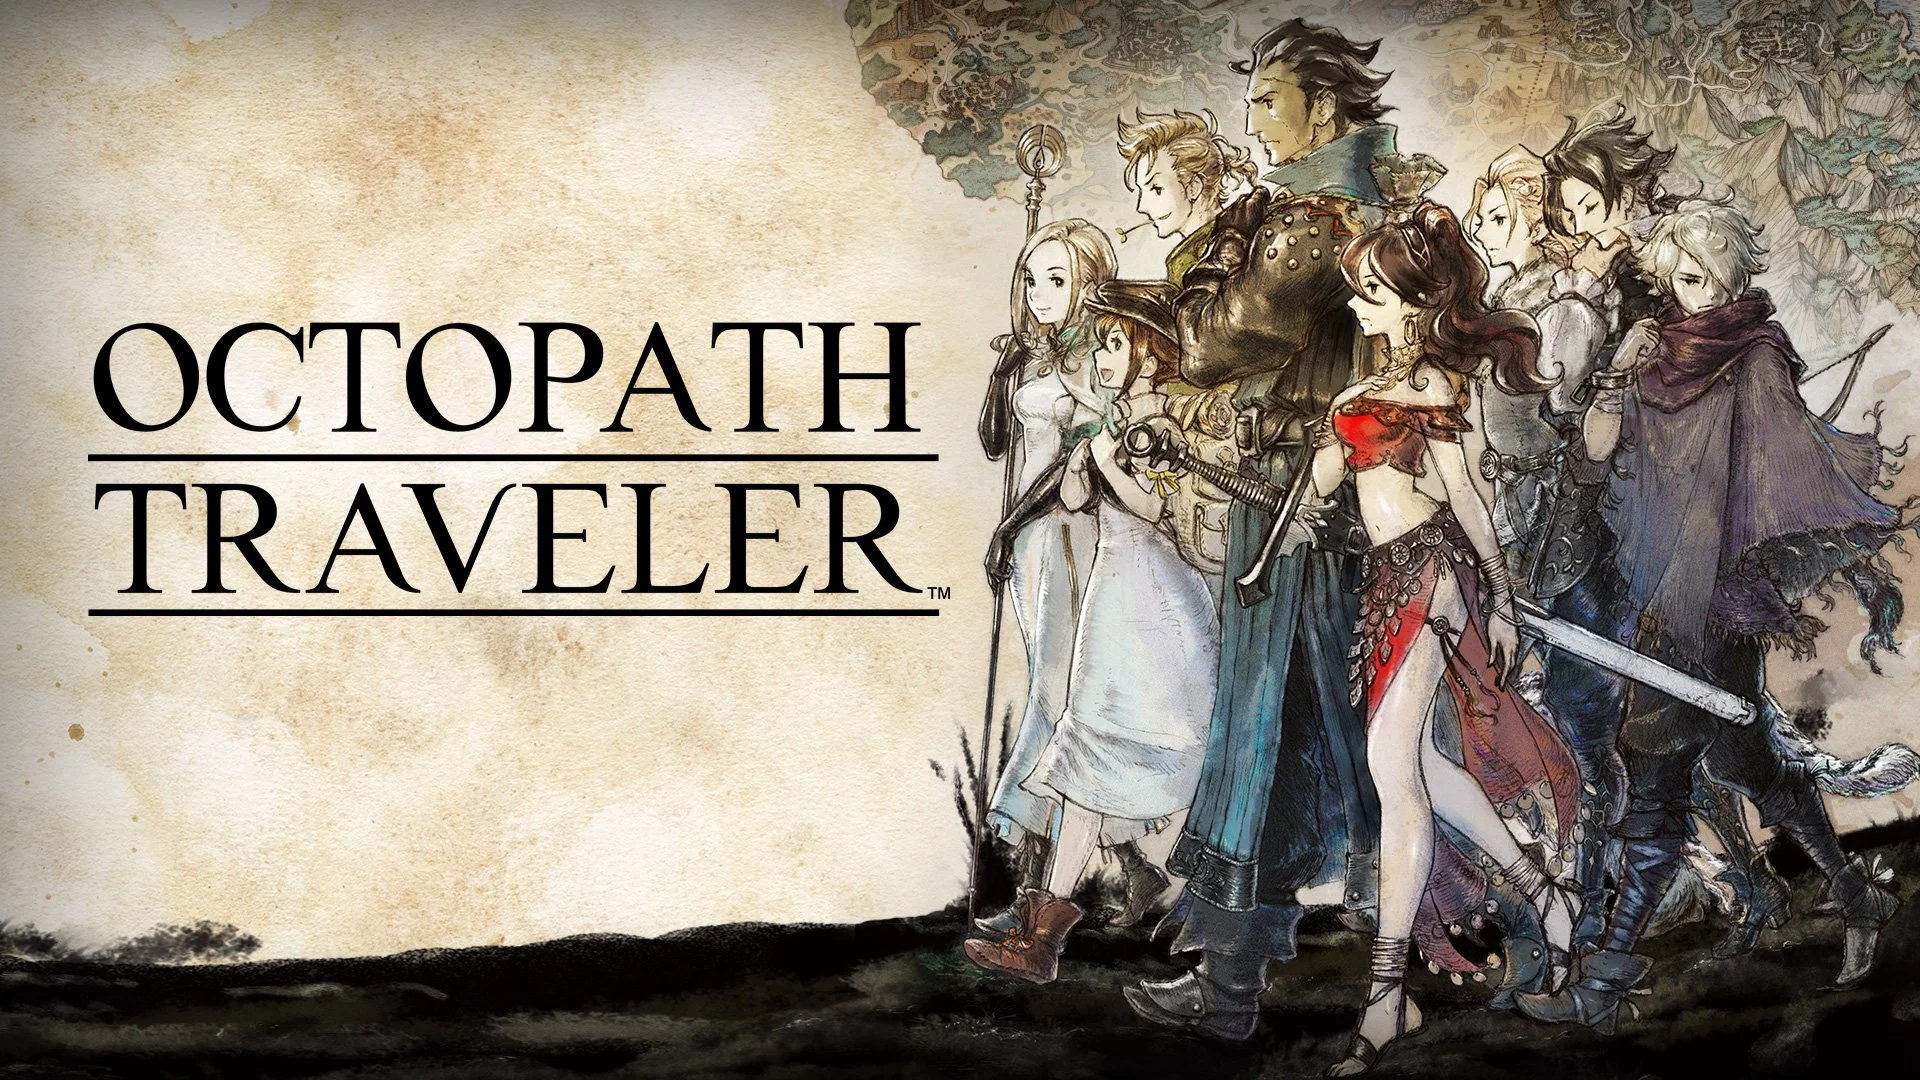 Download OCTOPATH TRAVELER: CotC on PC (Emulator) - LDPlayer